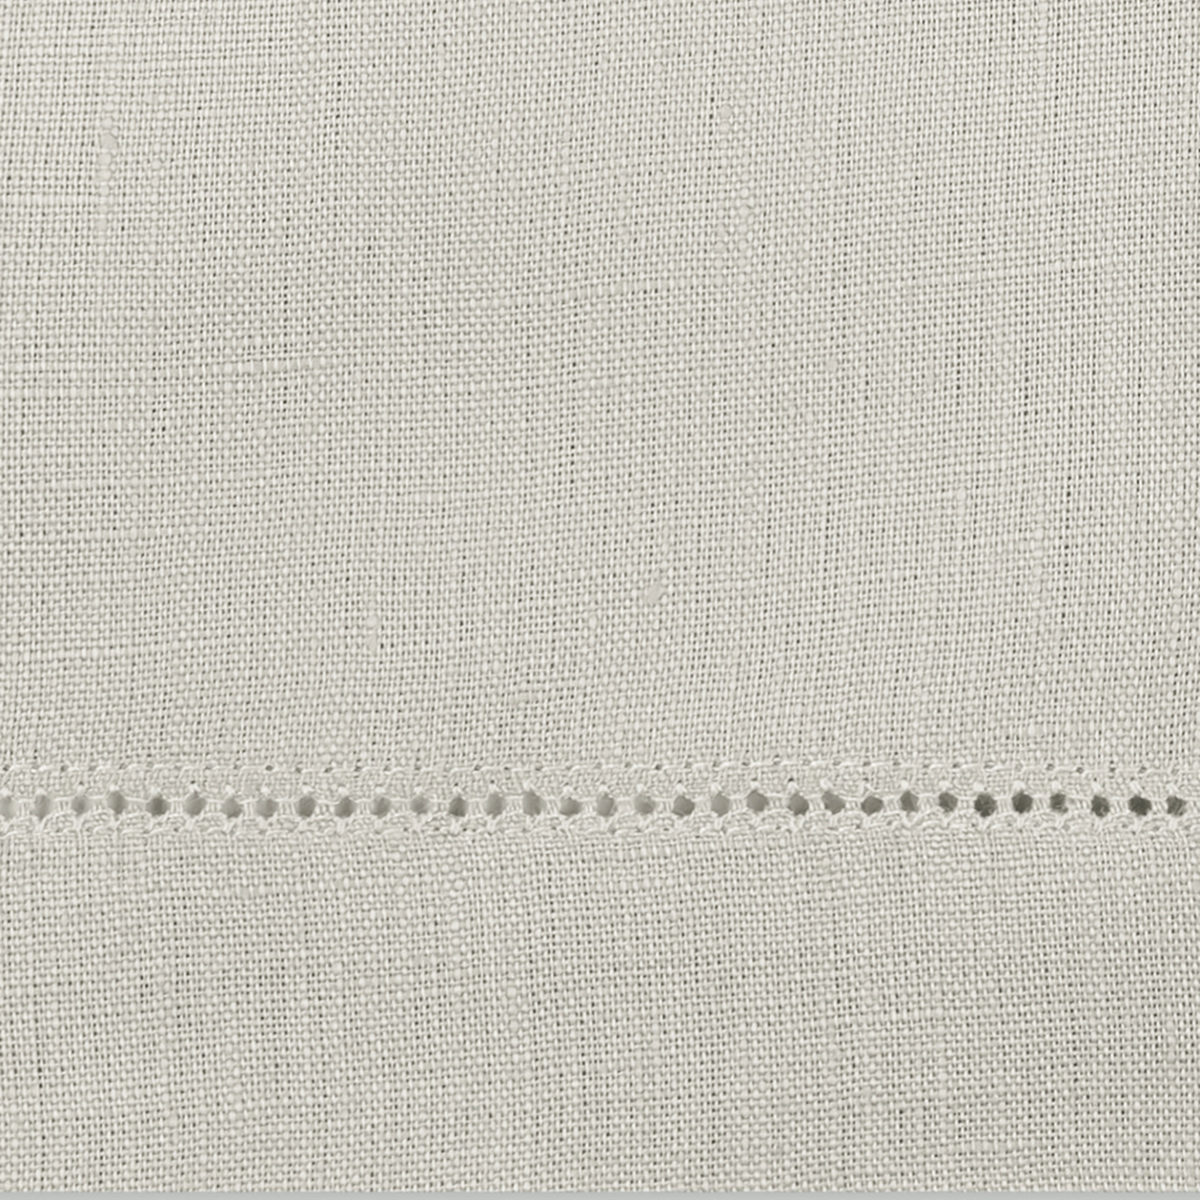 Fabric Closeup of Matouk Roman Hemstitch Bedding Color Paloma